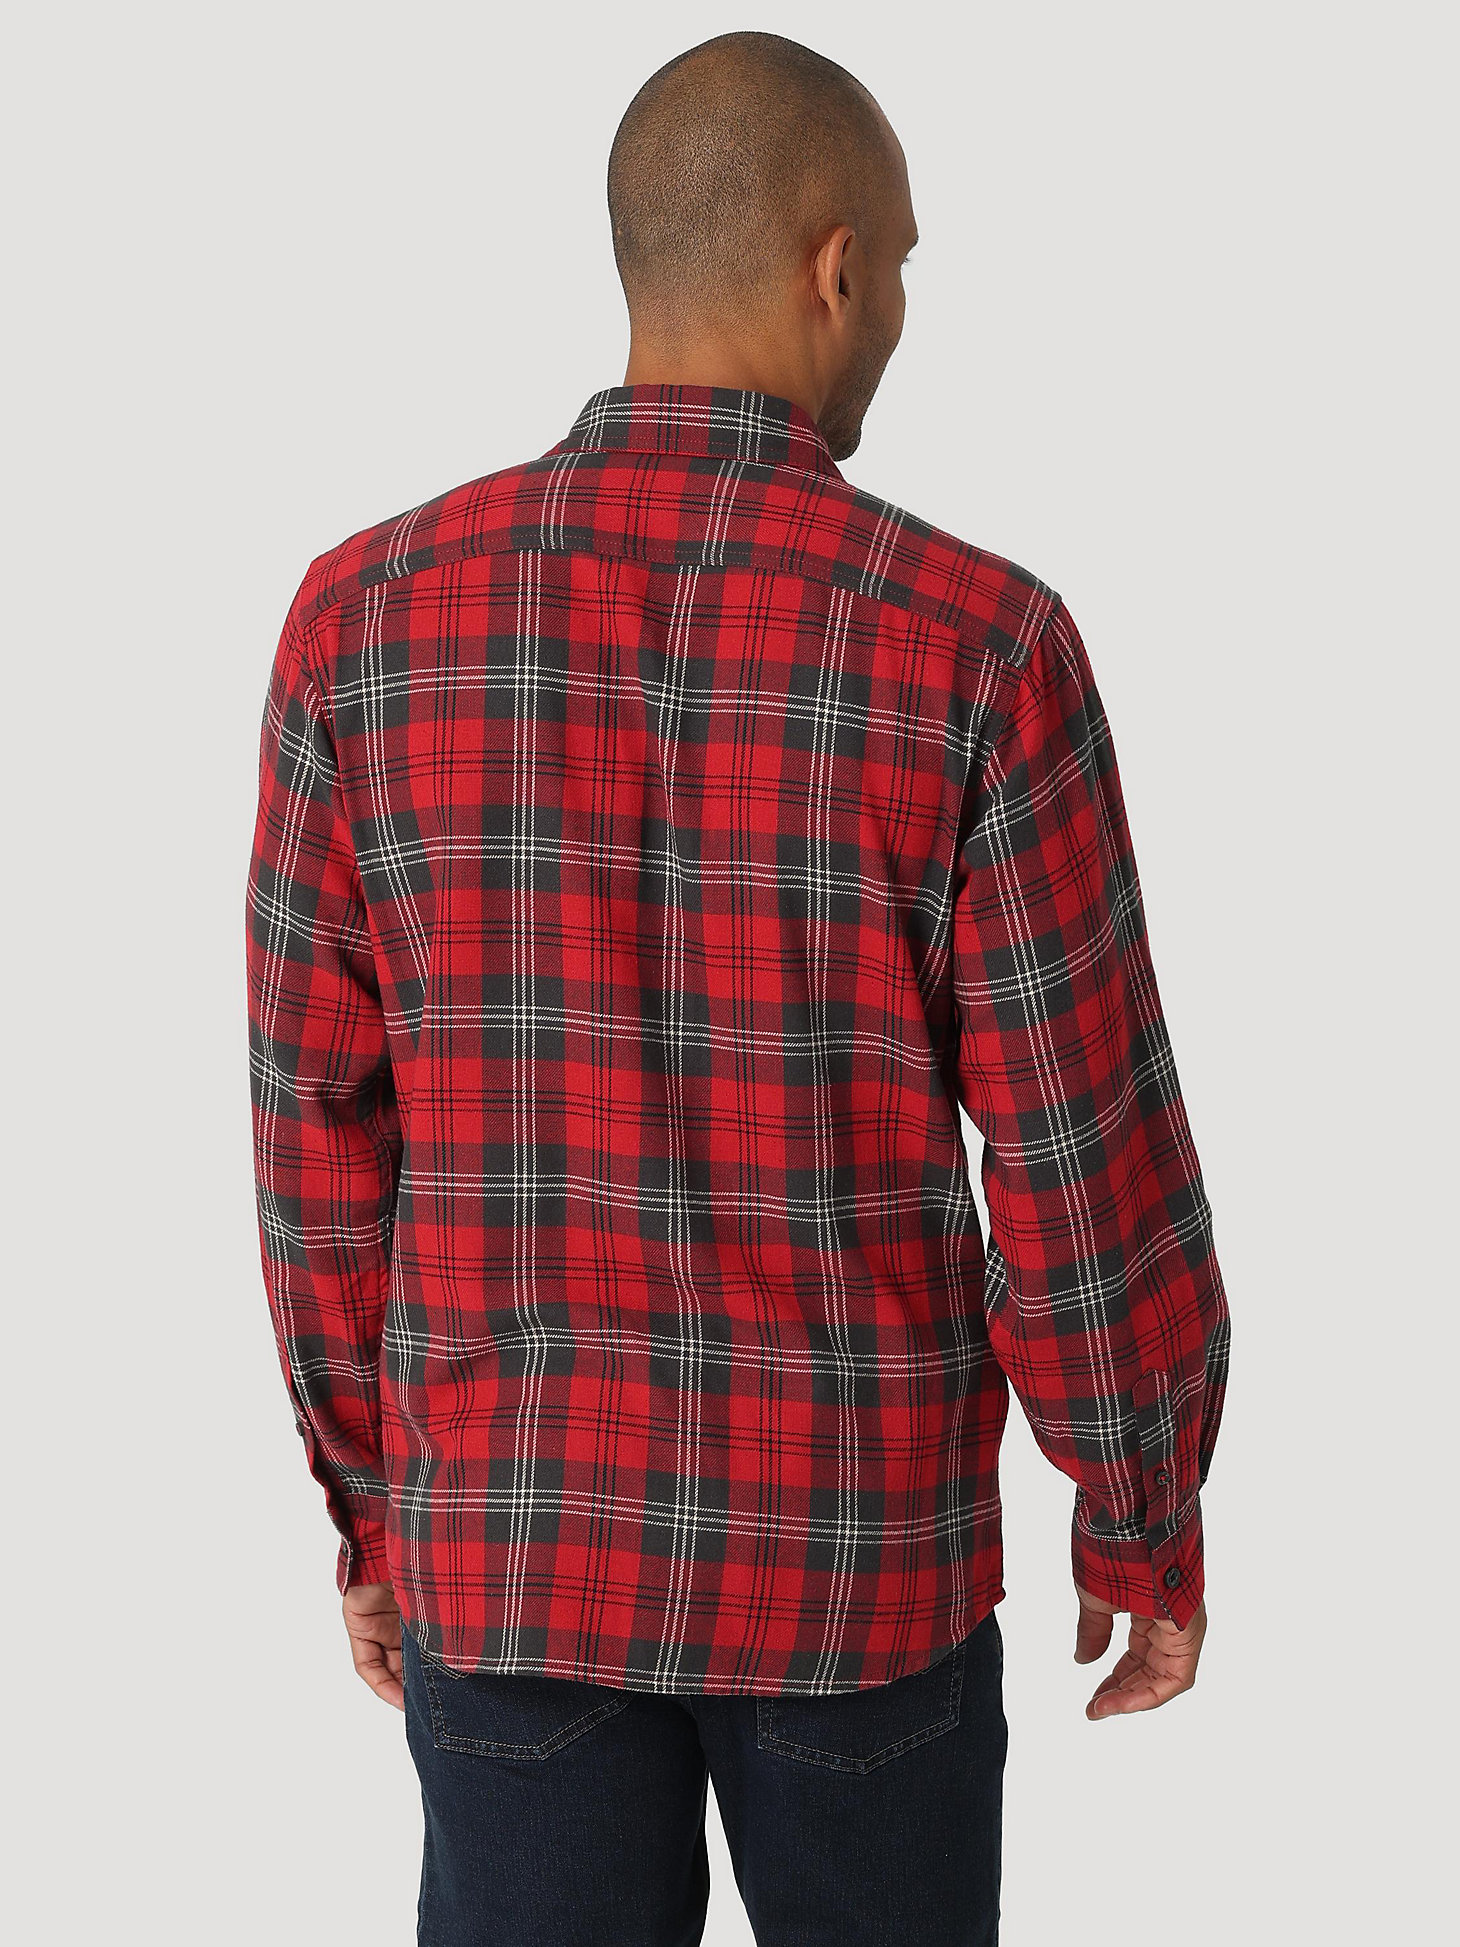 Men's Wrangler® Flannel Plaid Shirt in Rio Red alternative view 1